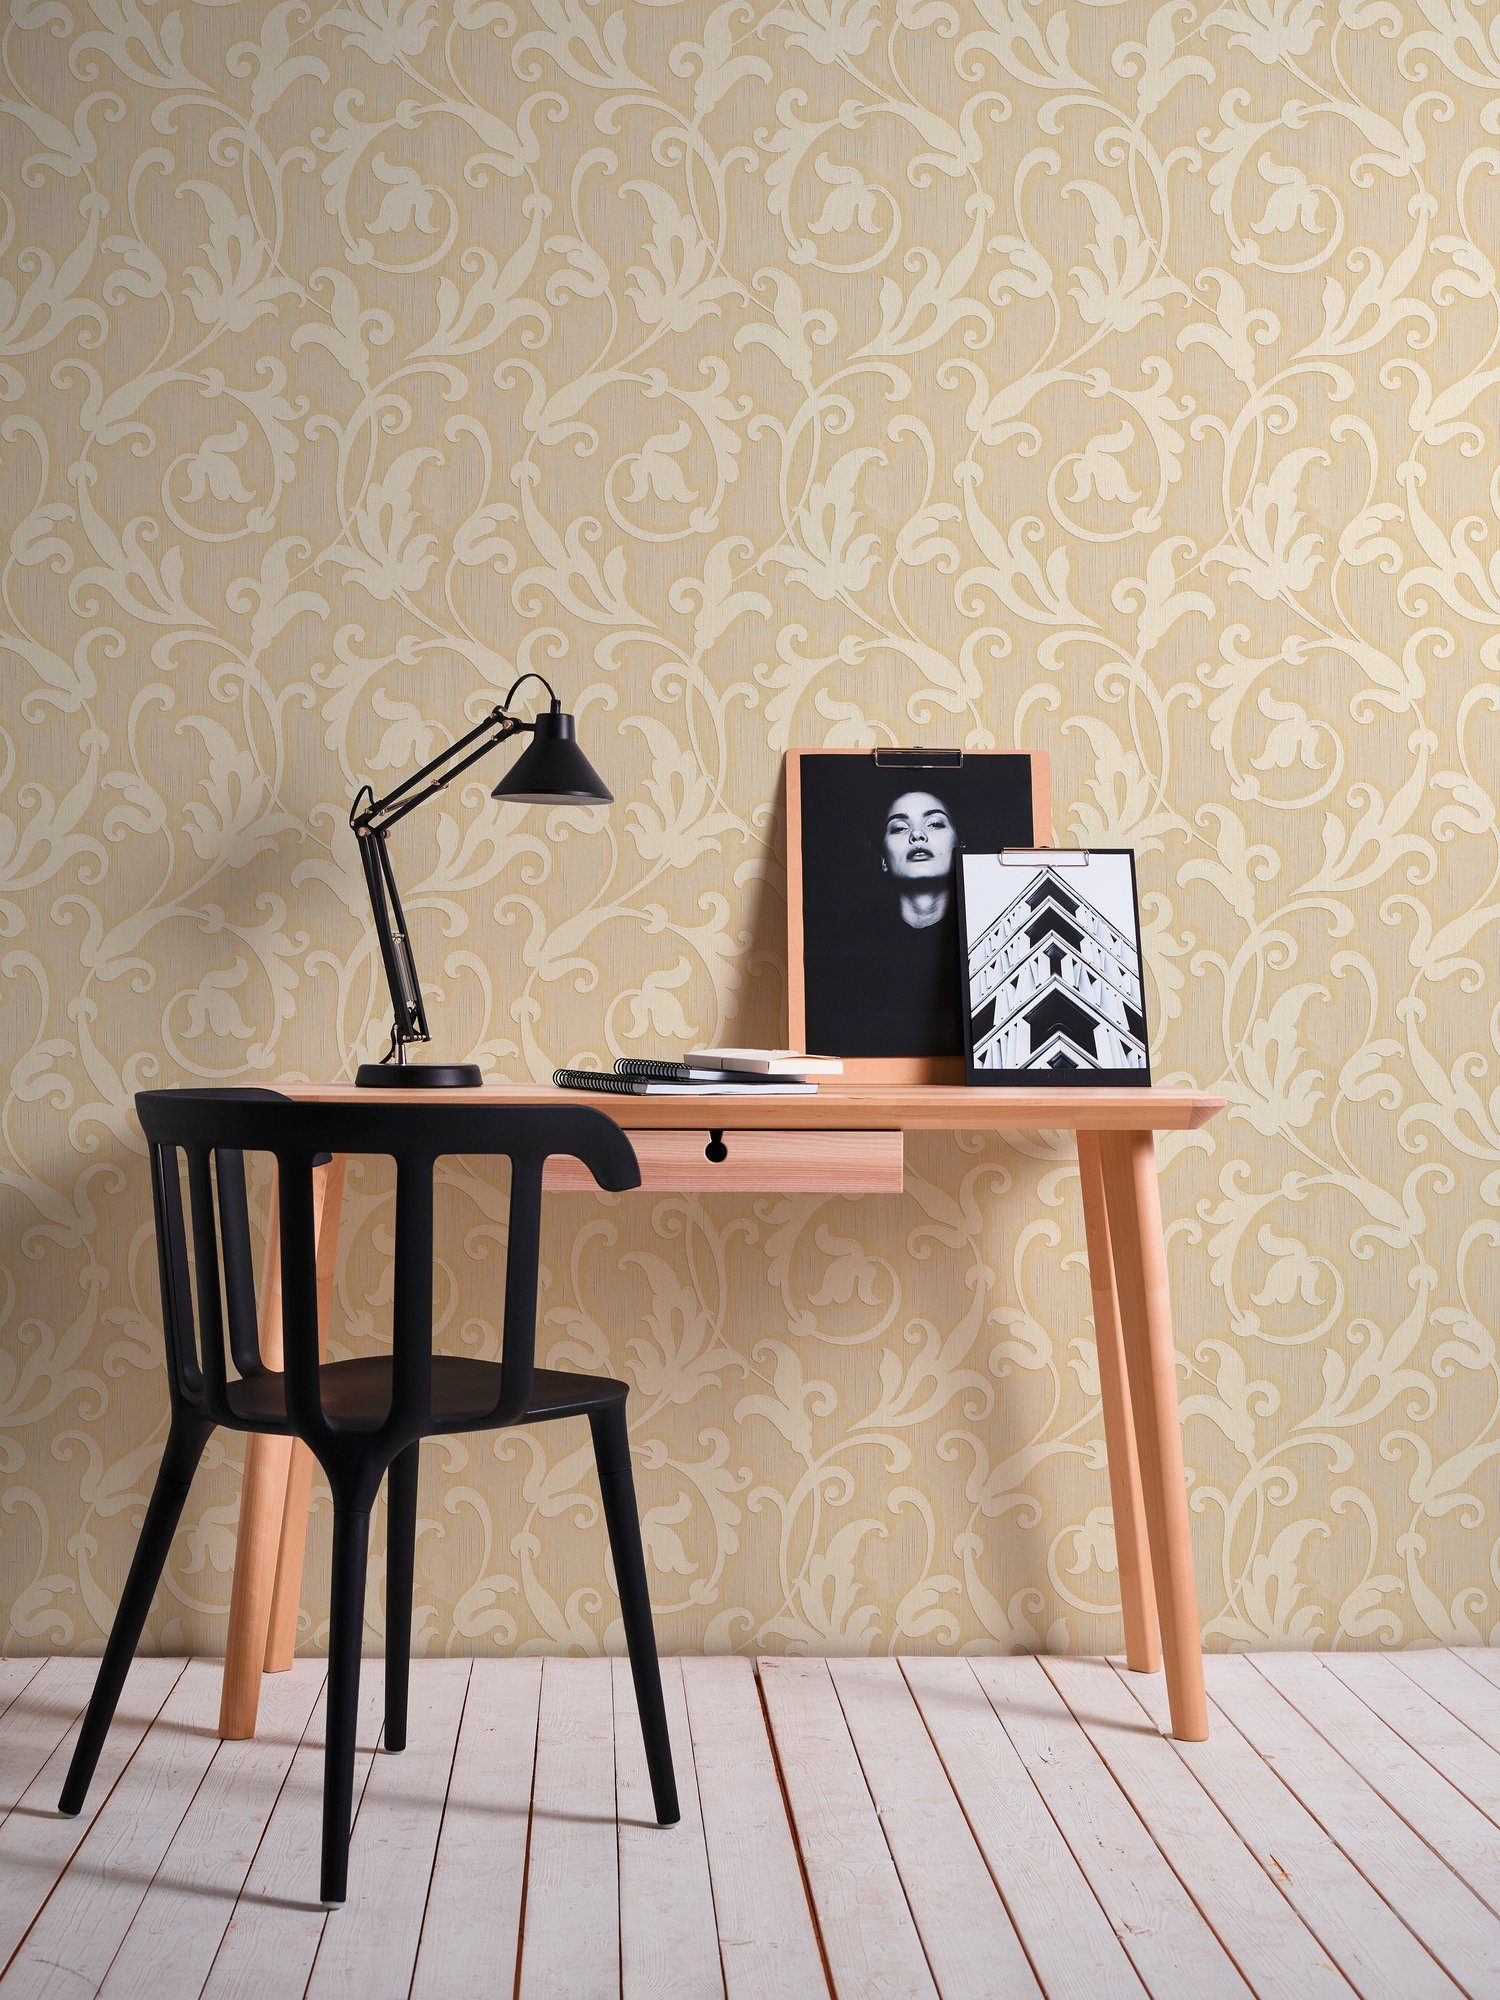 A.S. Création Architects Paper Barock, floral, Textiltapete Tapete gelb/gold samtig, Tessuto, Barock